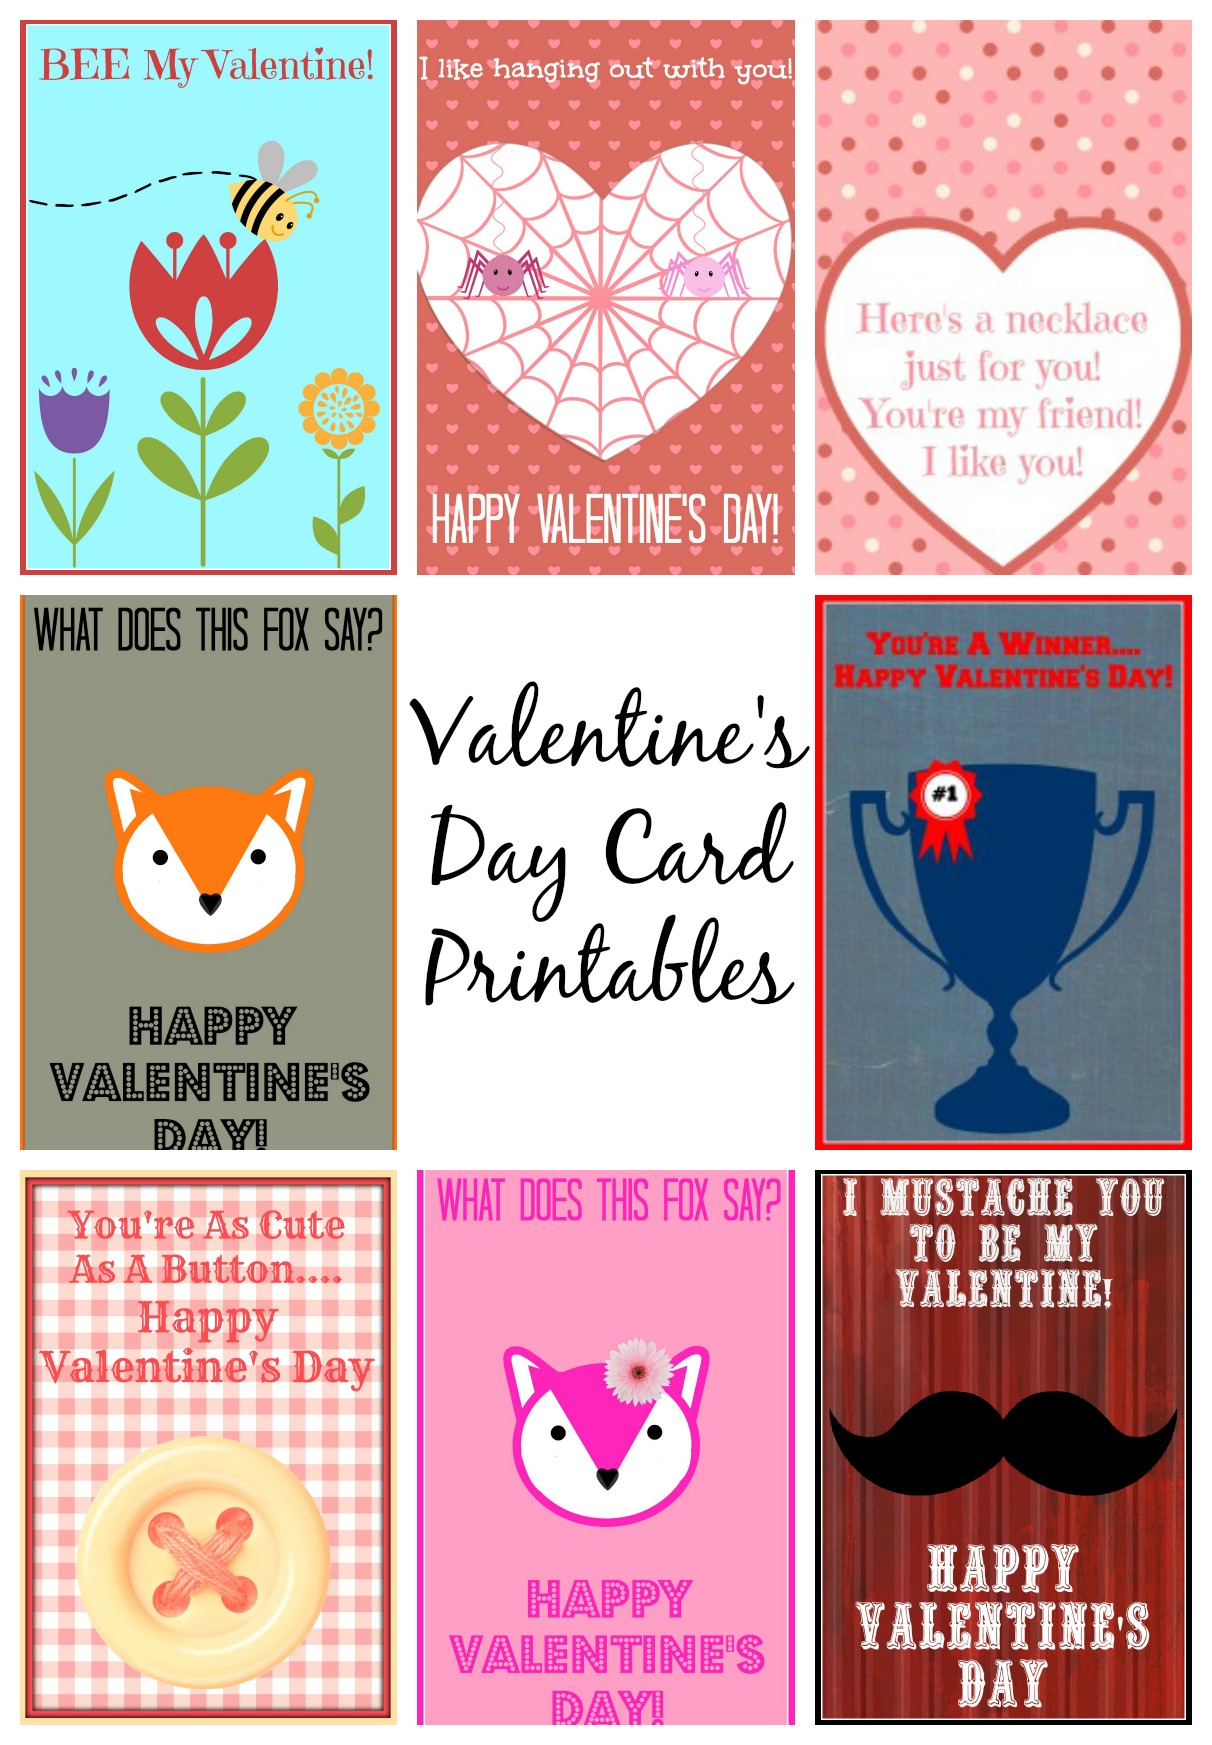 a-fun-dip-valentine-s-printable-momof6-valentines-card-sayings